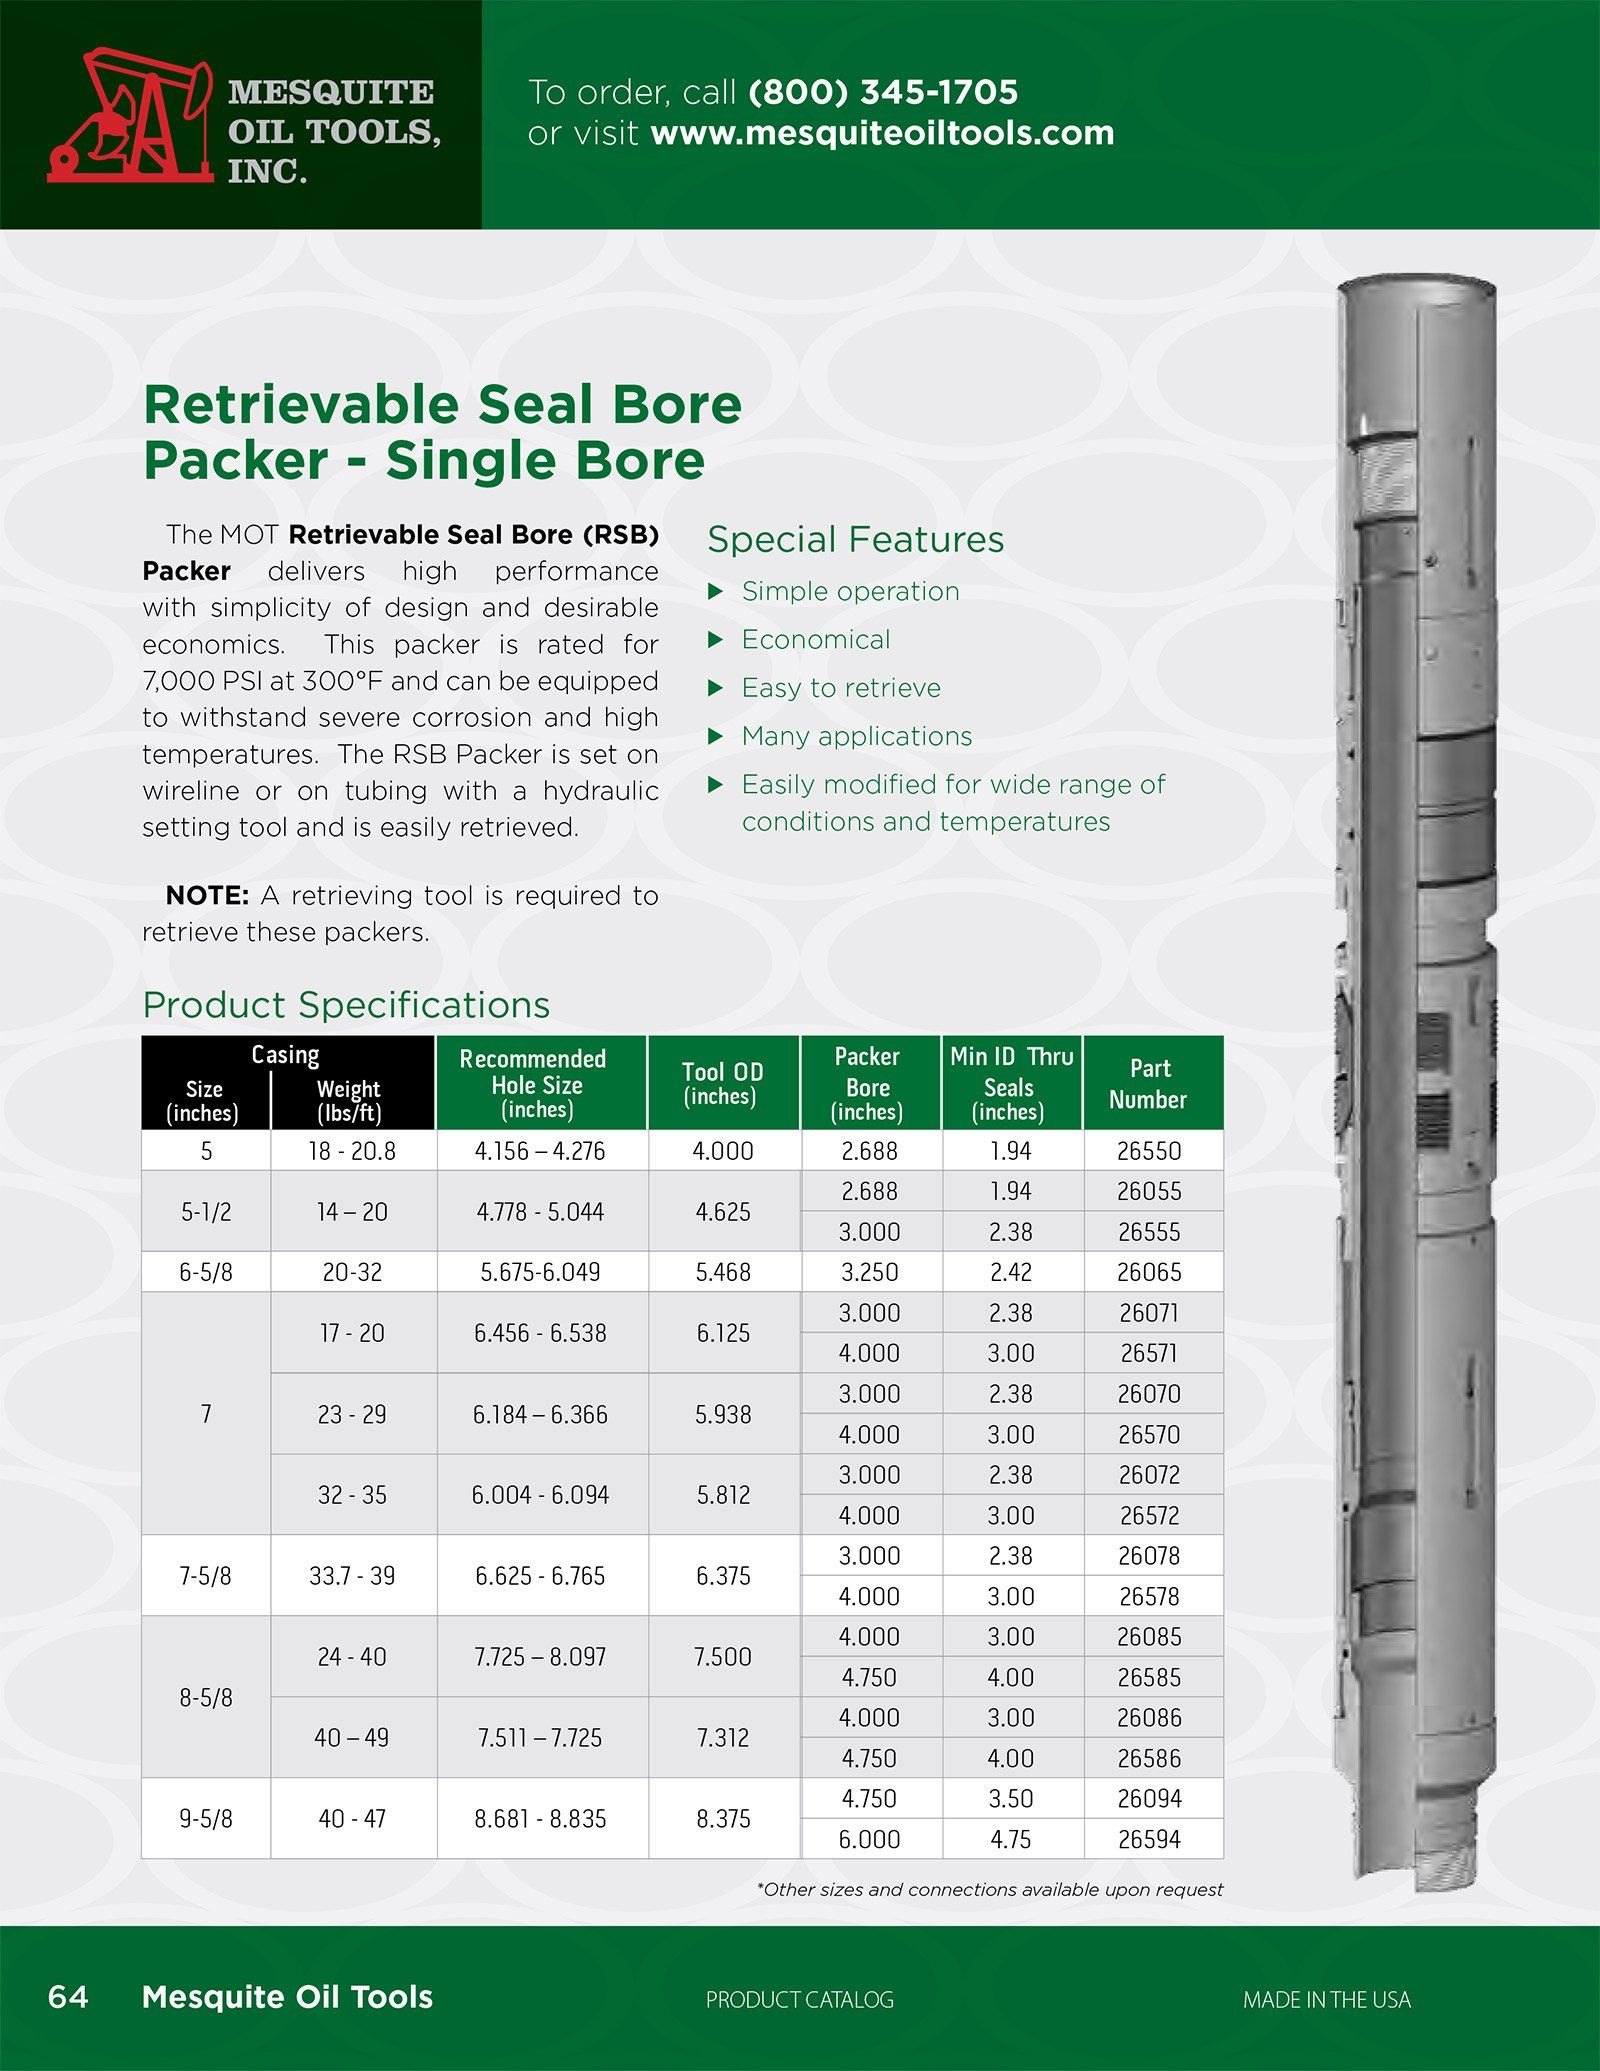 Retrievable Seal Bore Packer - Single Bore Information